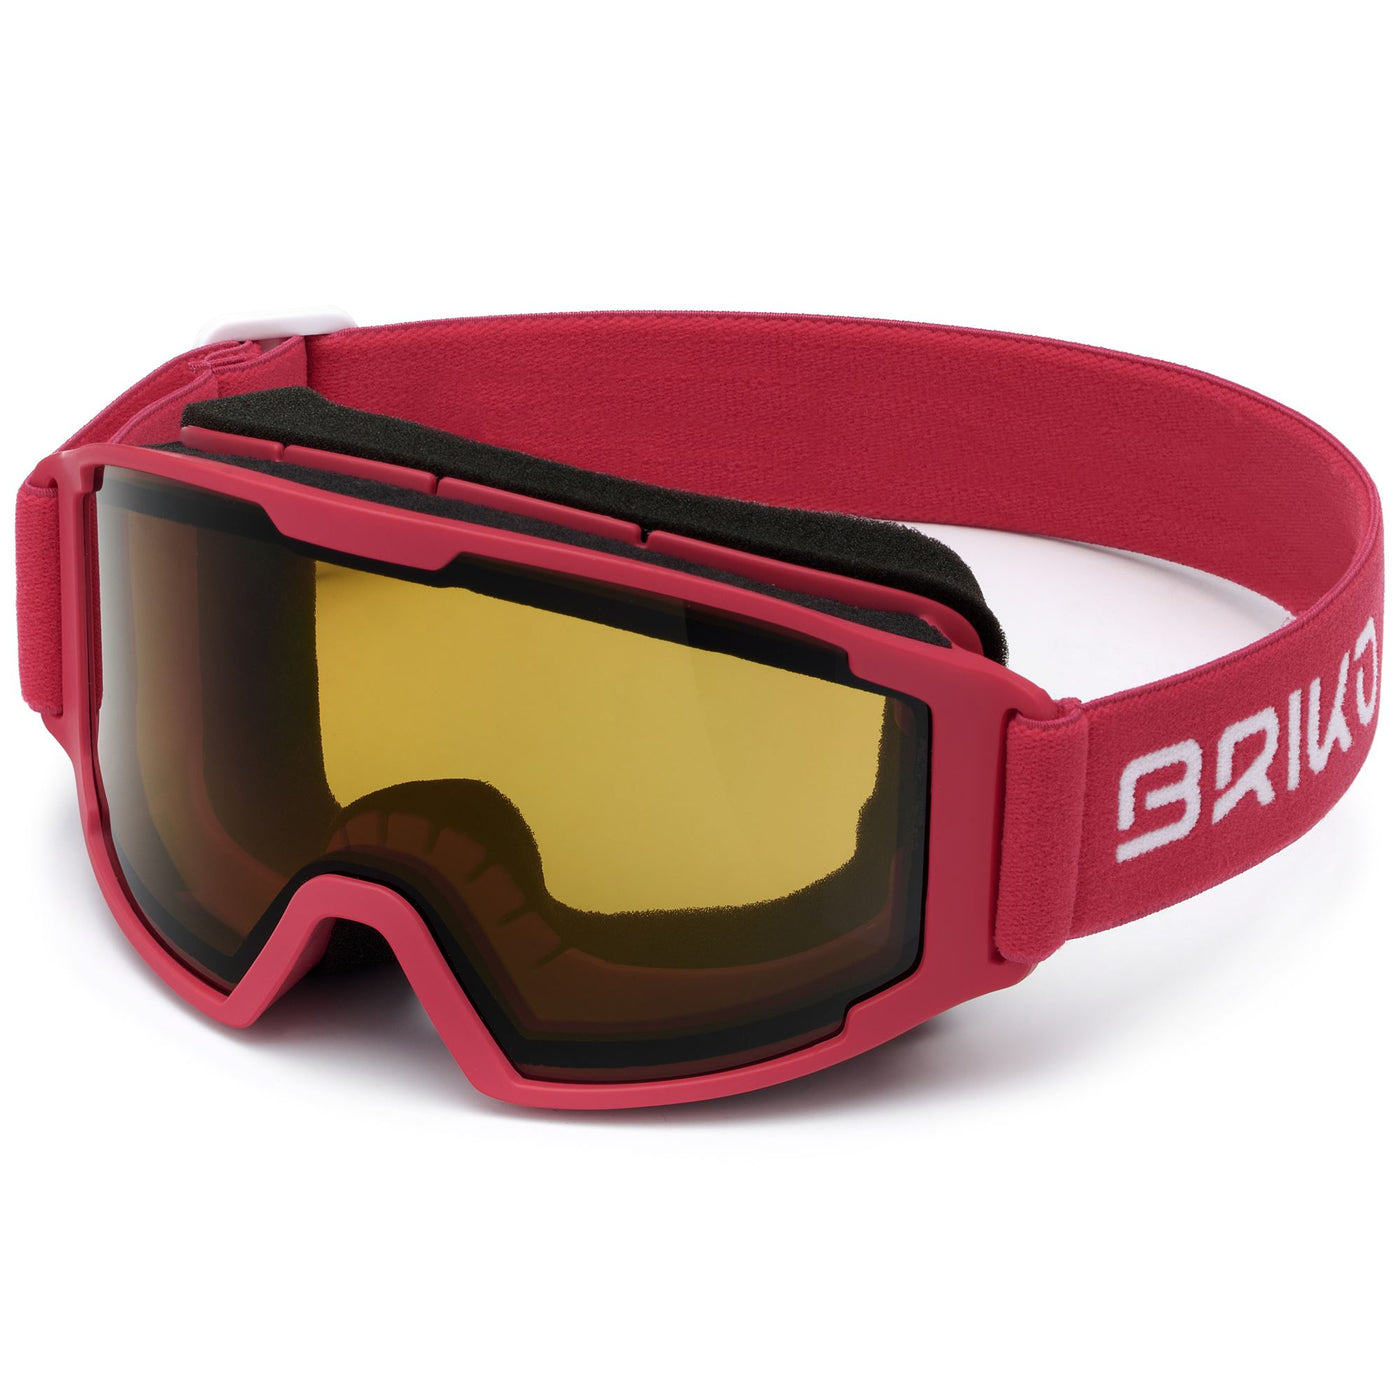 Goggles Kid unisex SAETTA Ski  Goggles PINK MAROON FLUSH - BR2 | briko Photo (jpg Rgb)			